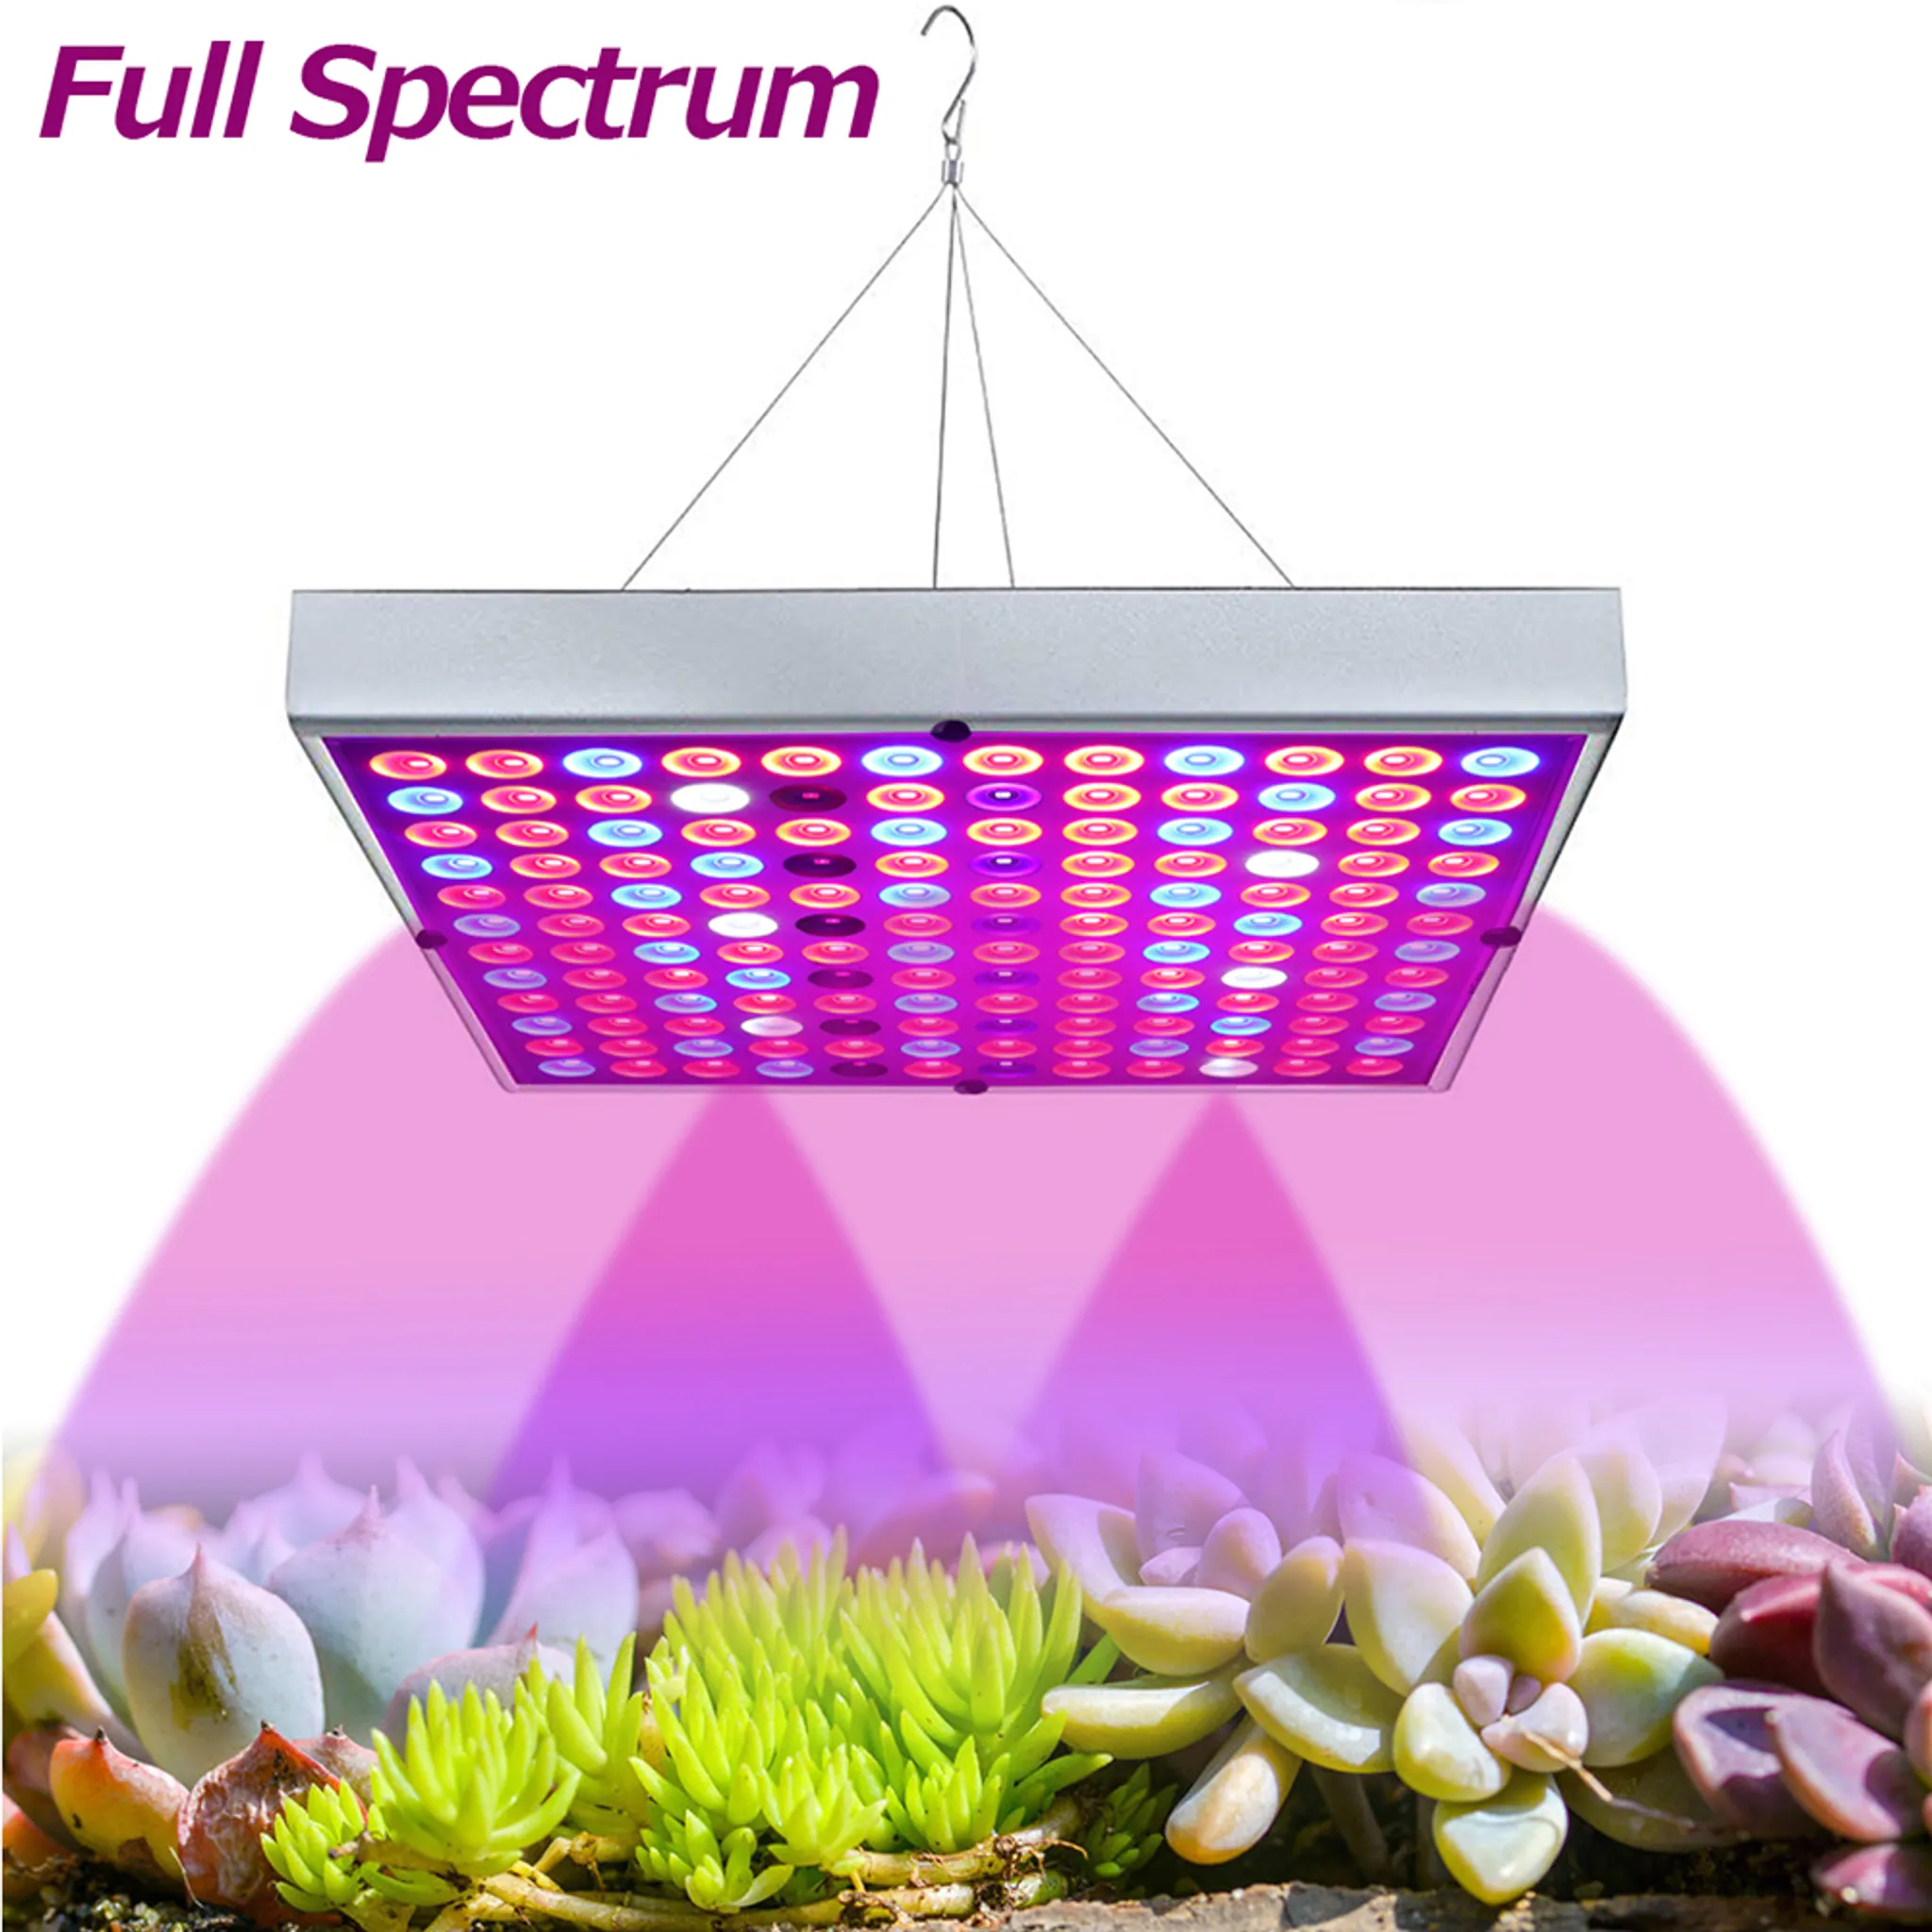 75/144 LEDs Super Ultradünne Lampe Vollspektrum Für Indoor/Grow Box/Greenhouse Veg QYTWSJ Led Plant Grow Light 45W / 25W Led-Aufhänger Wachsen Lampe 